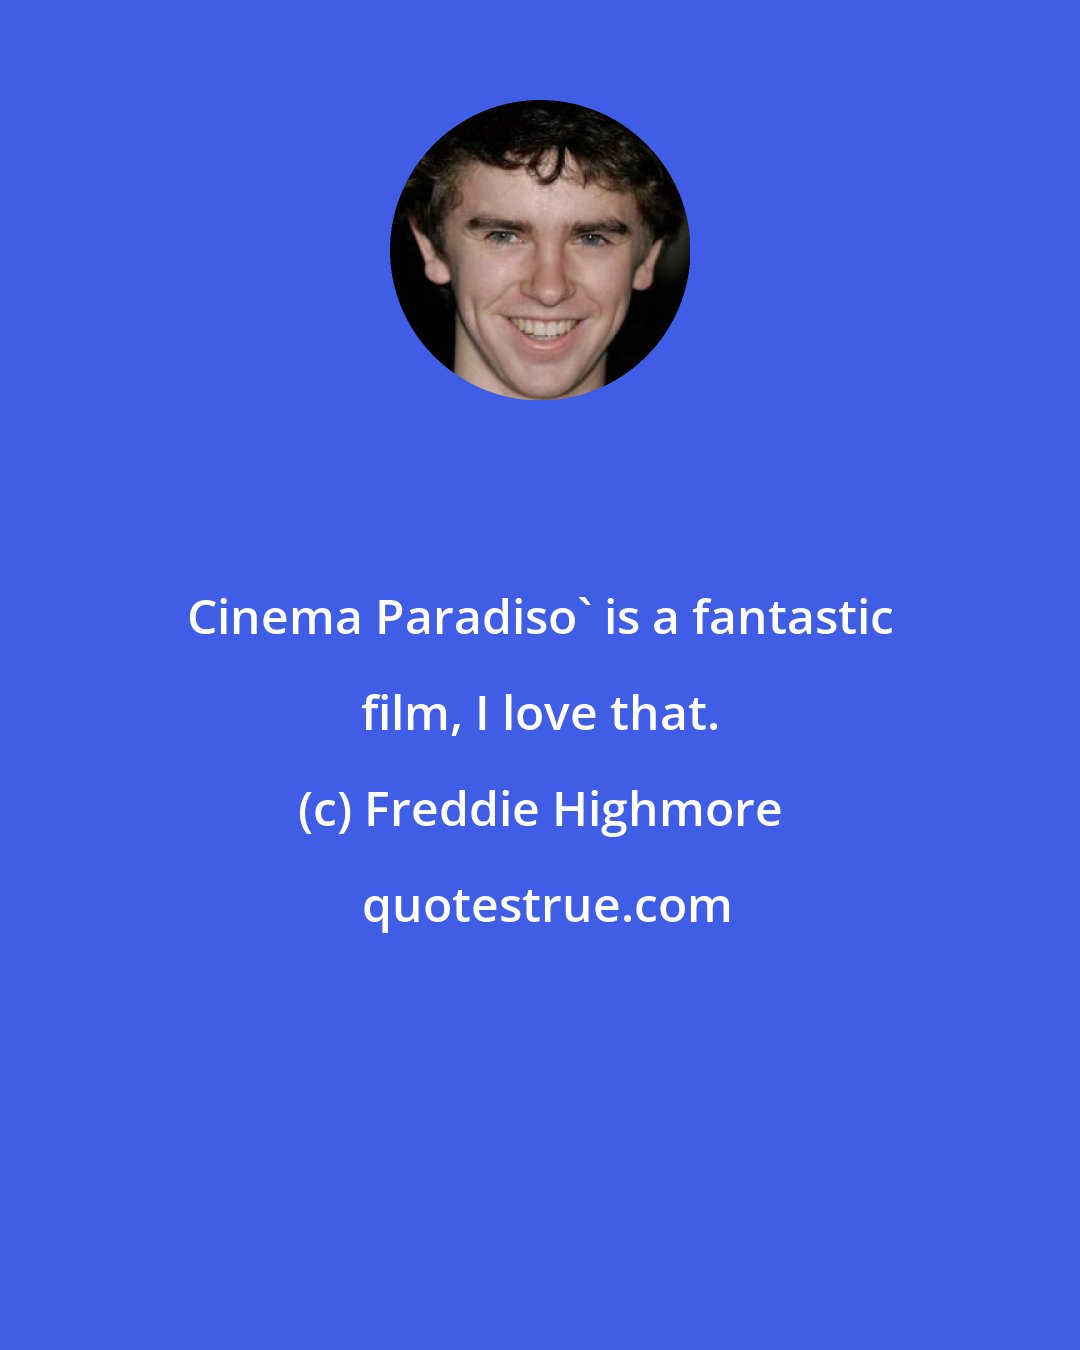 Freddie Highmore: Cinema Paradiso' is a fantastic film, I love that.